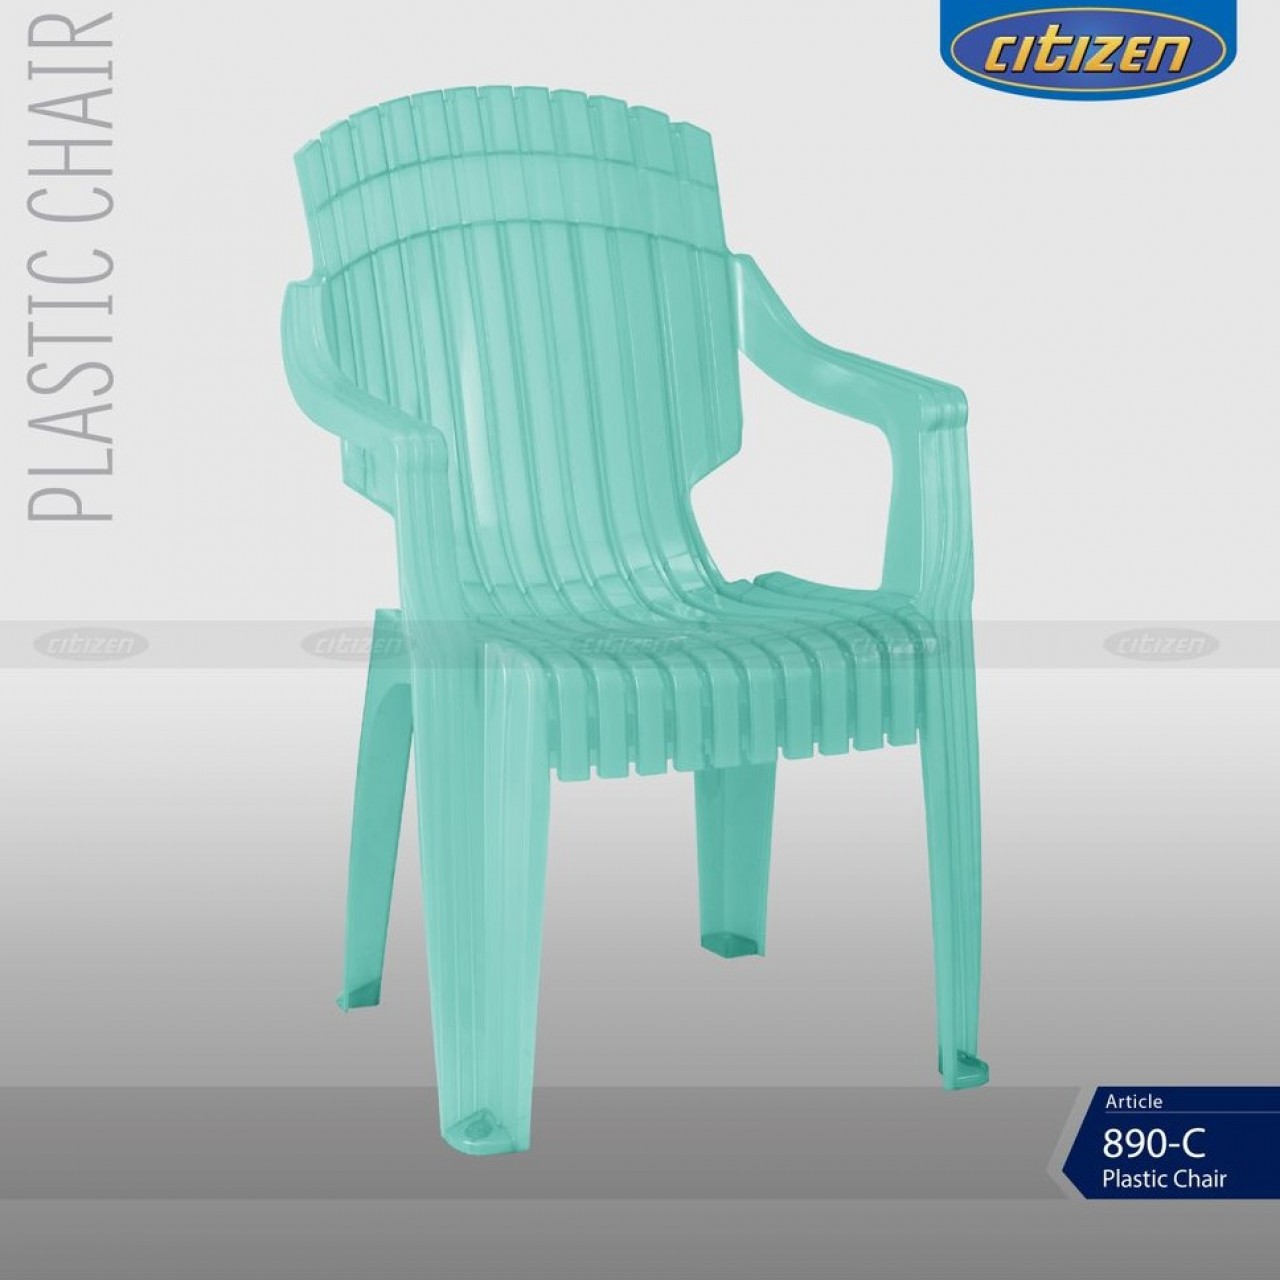 Citizen 890-C Plastic Crystal & Regular Chair